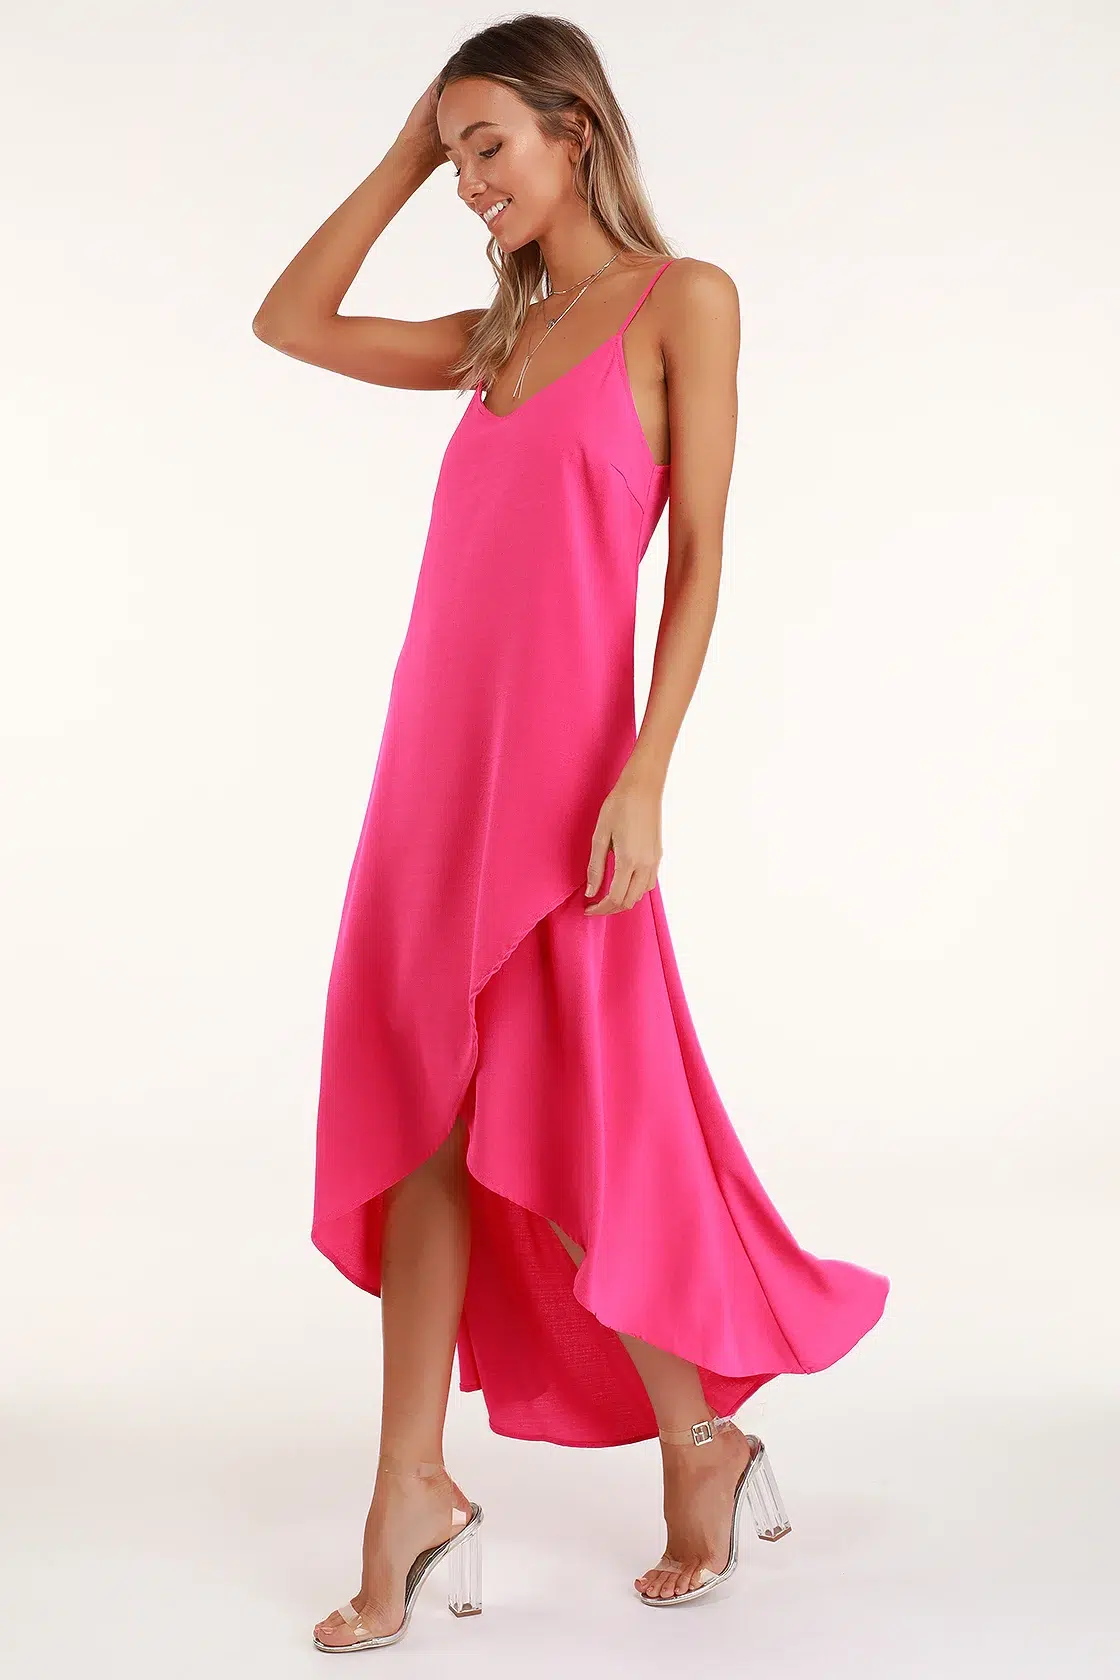 5. Lulus Bright Pink Maxi Dress